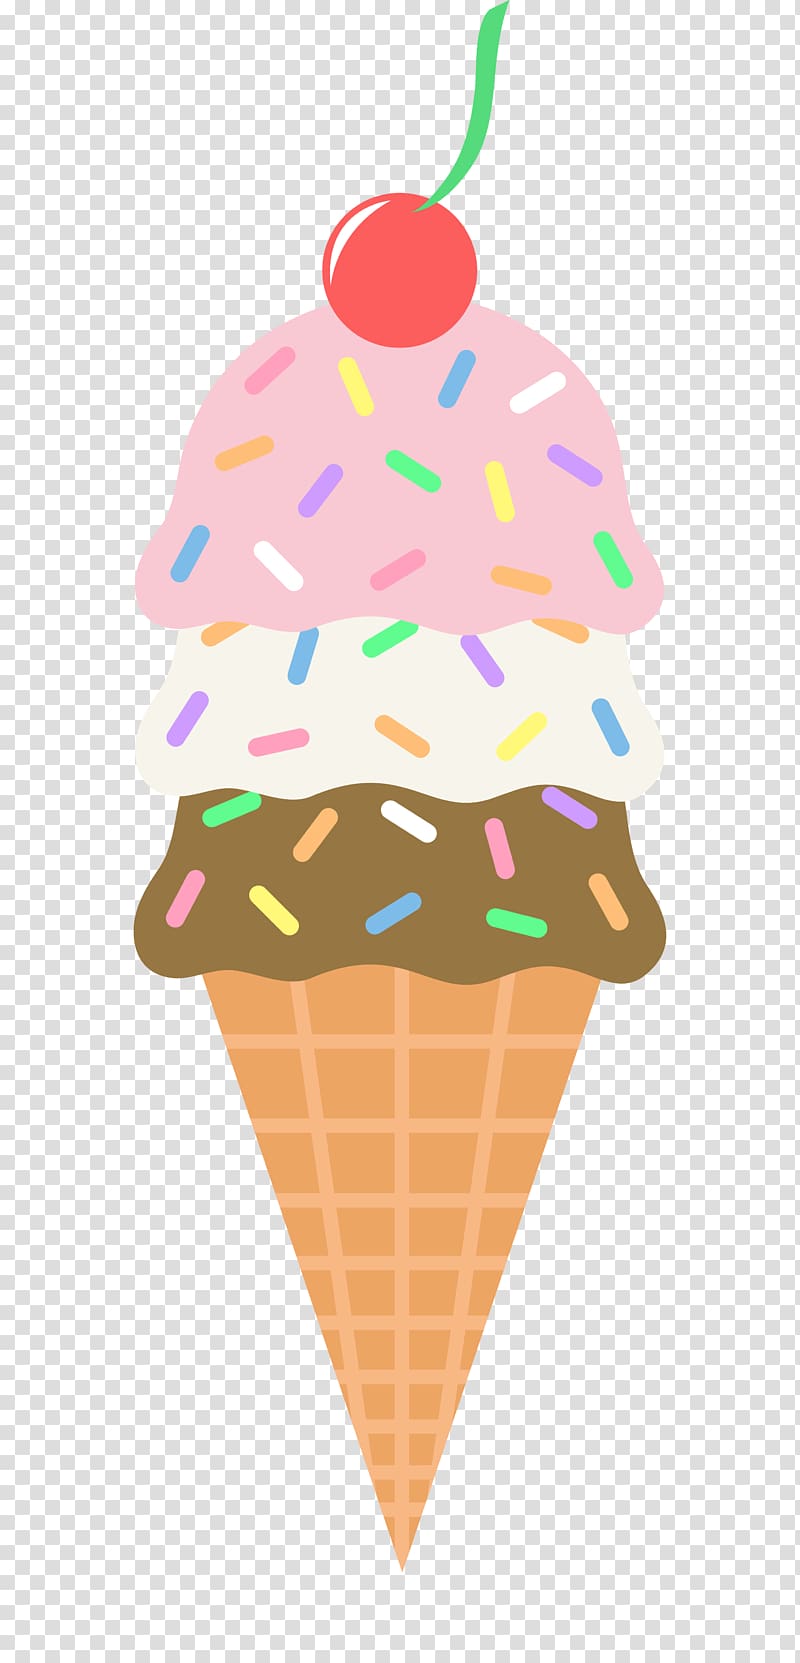 Sundae clipart soft serve. Ice cream cone neapolitan